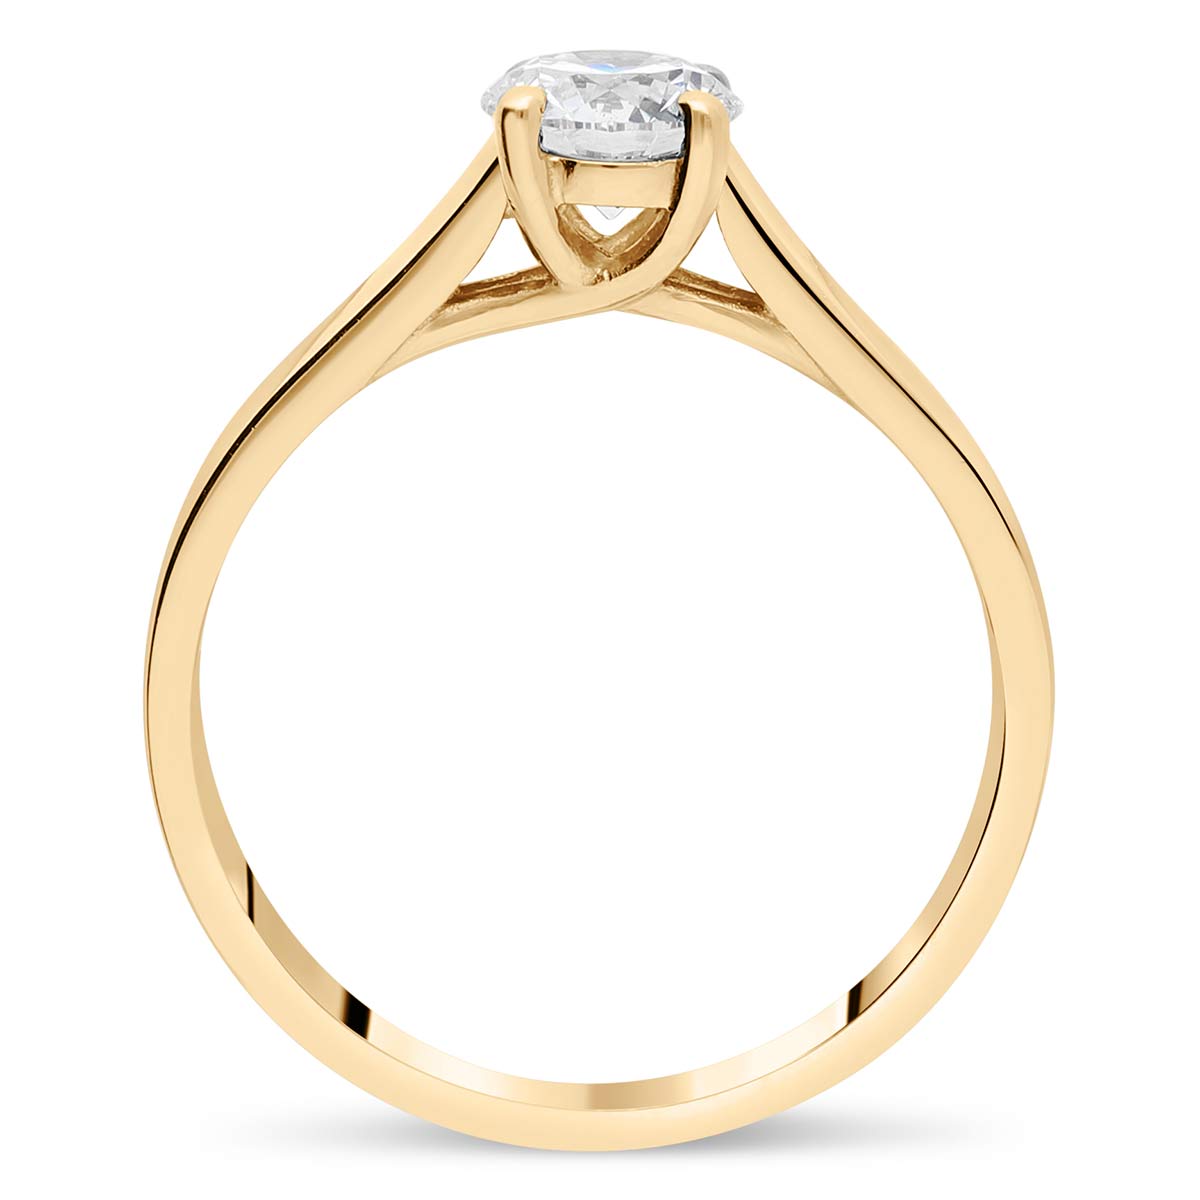 st-barth-solitaires-diamants-certifies-style-classique-or-jaune-750-